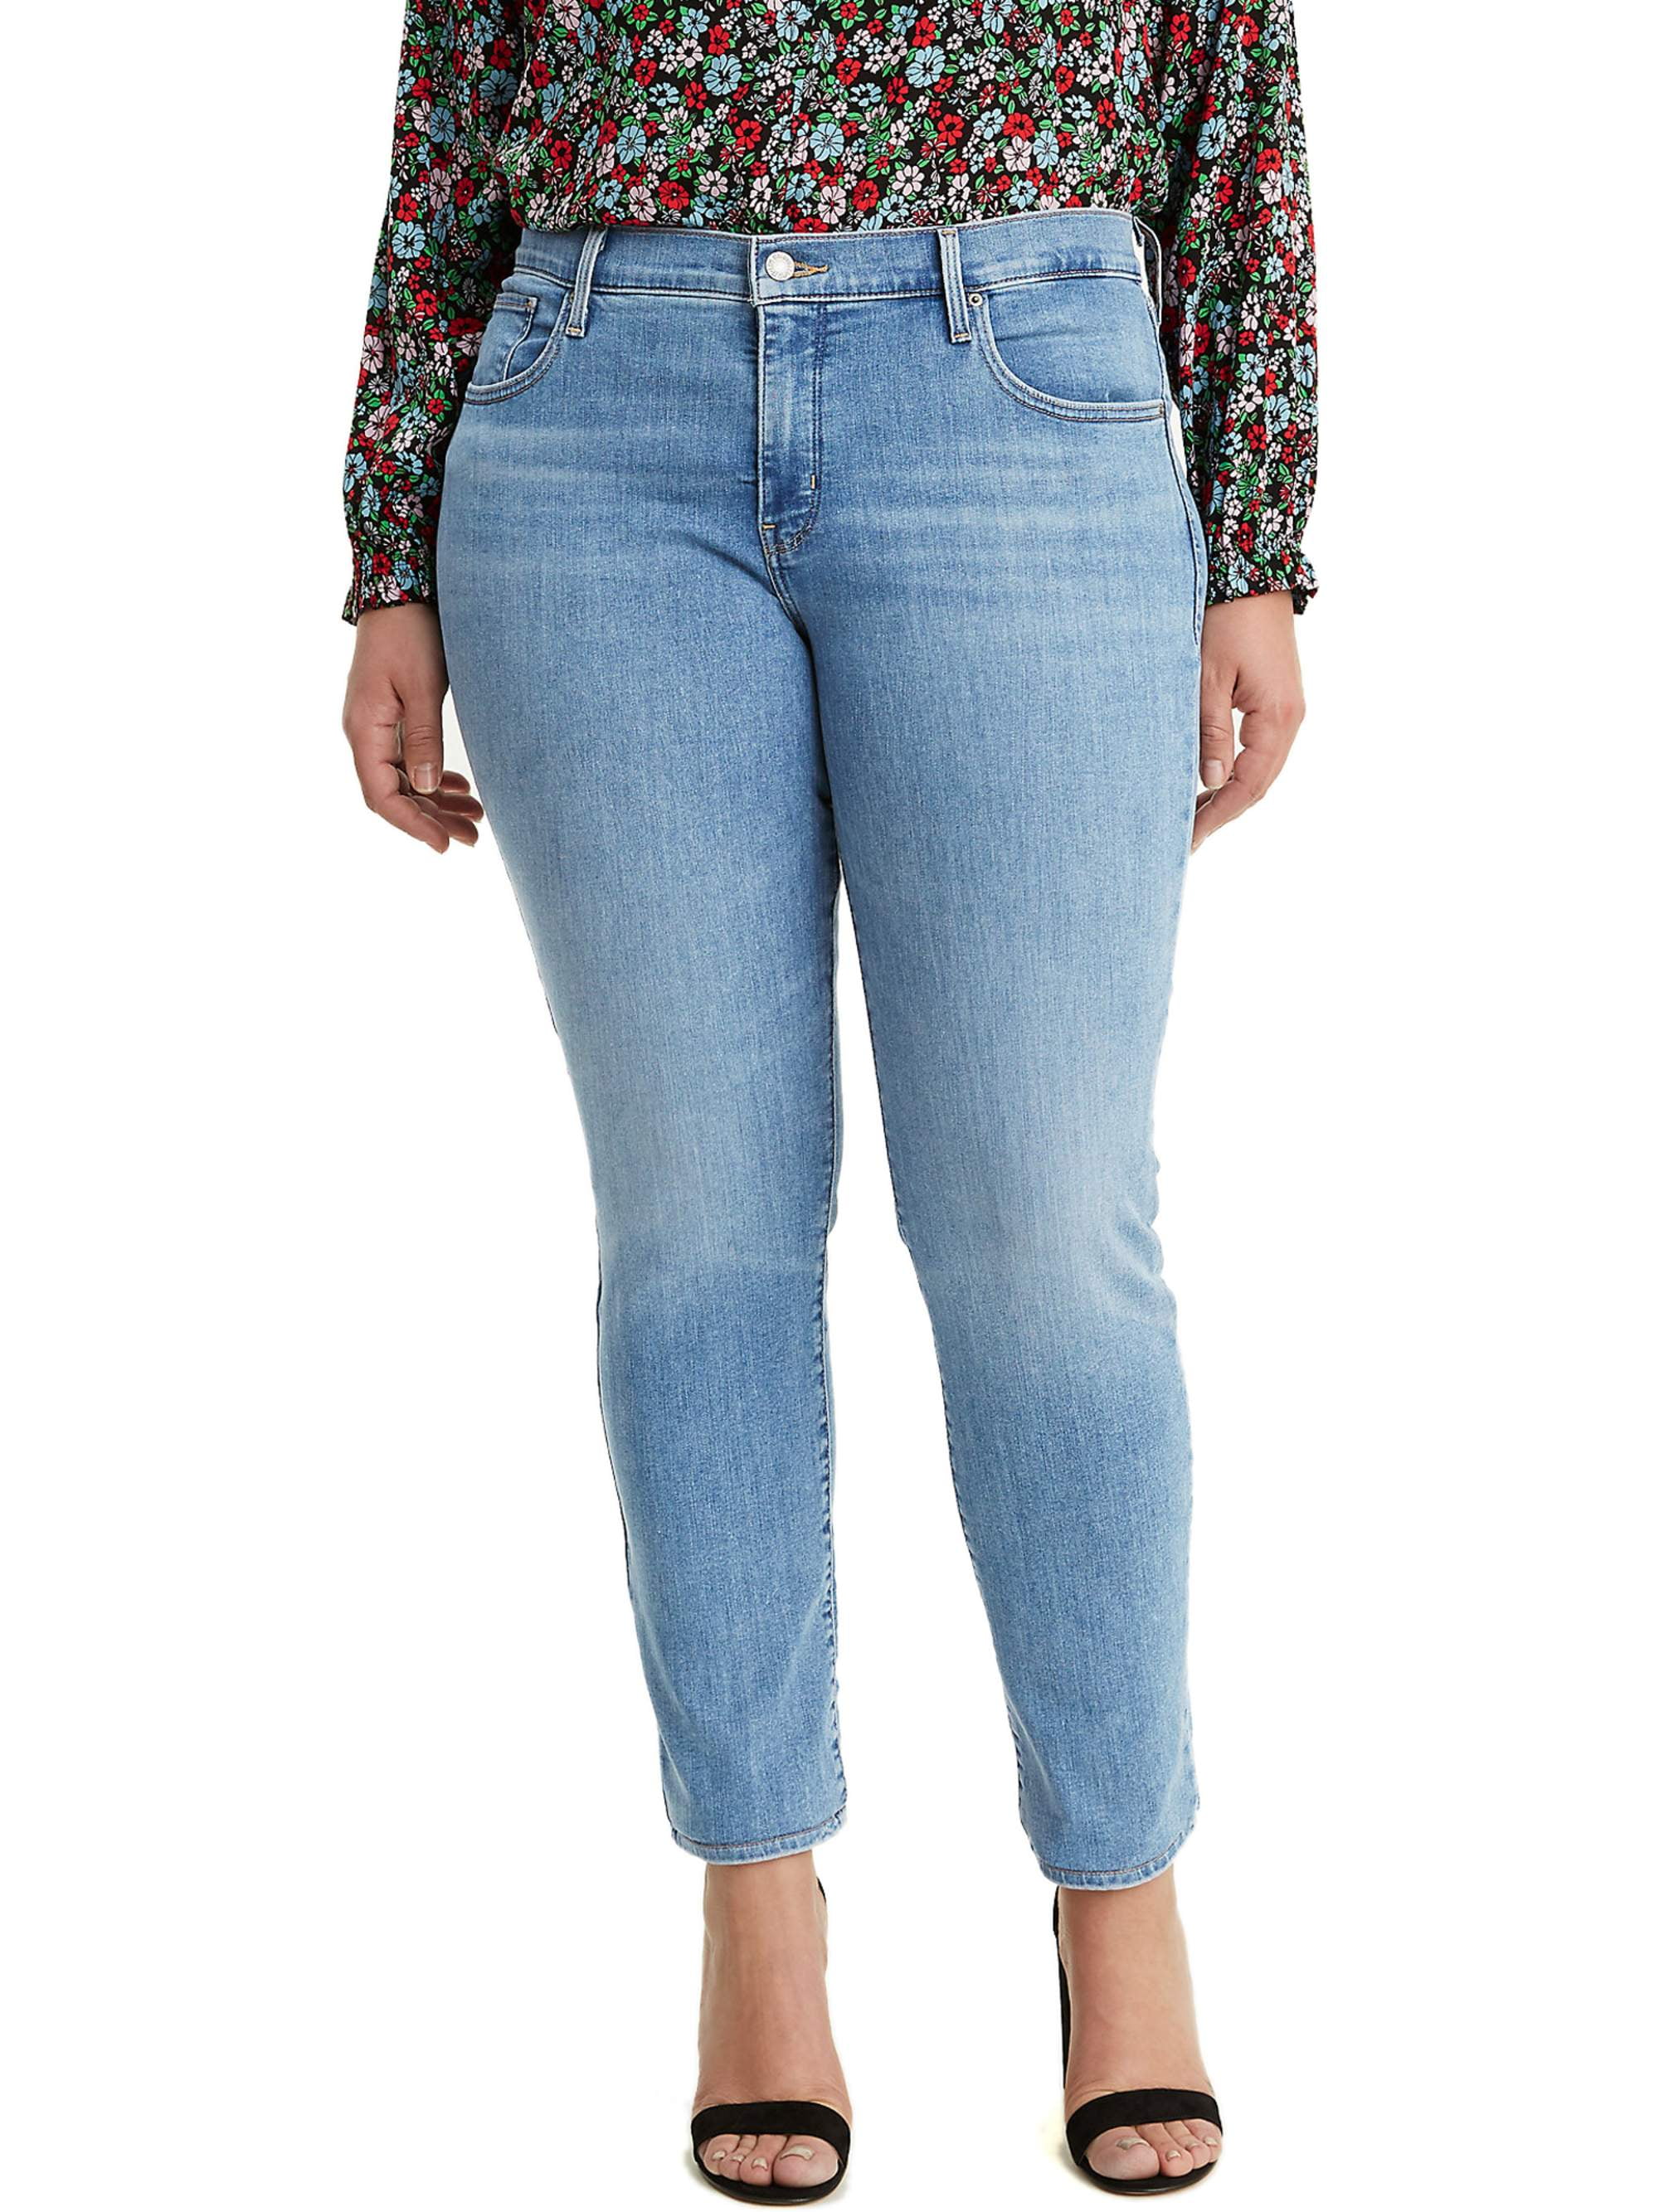 Levi's - Levi’s Women's 311 Shaping Skinny Jeans - Walmart.com ...